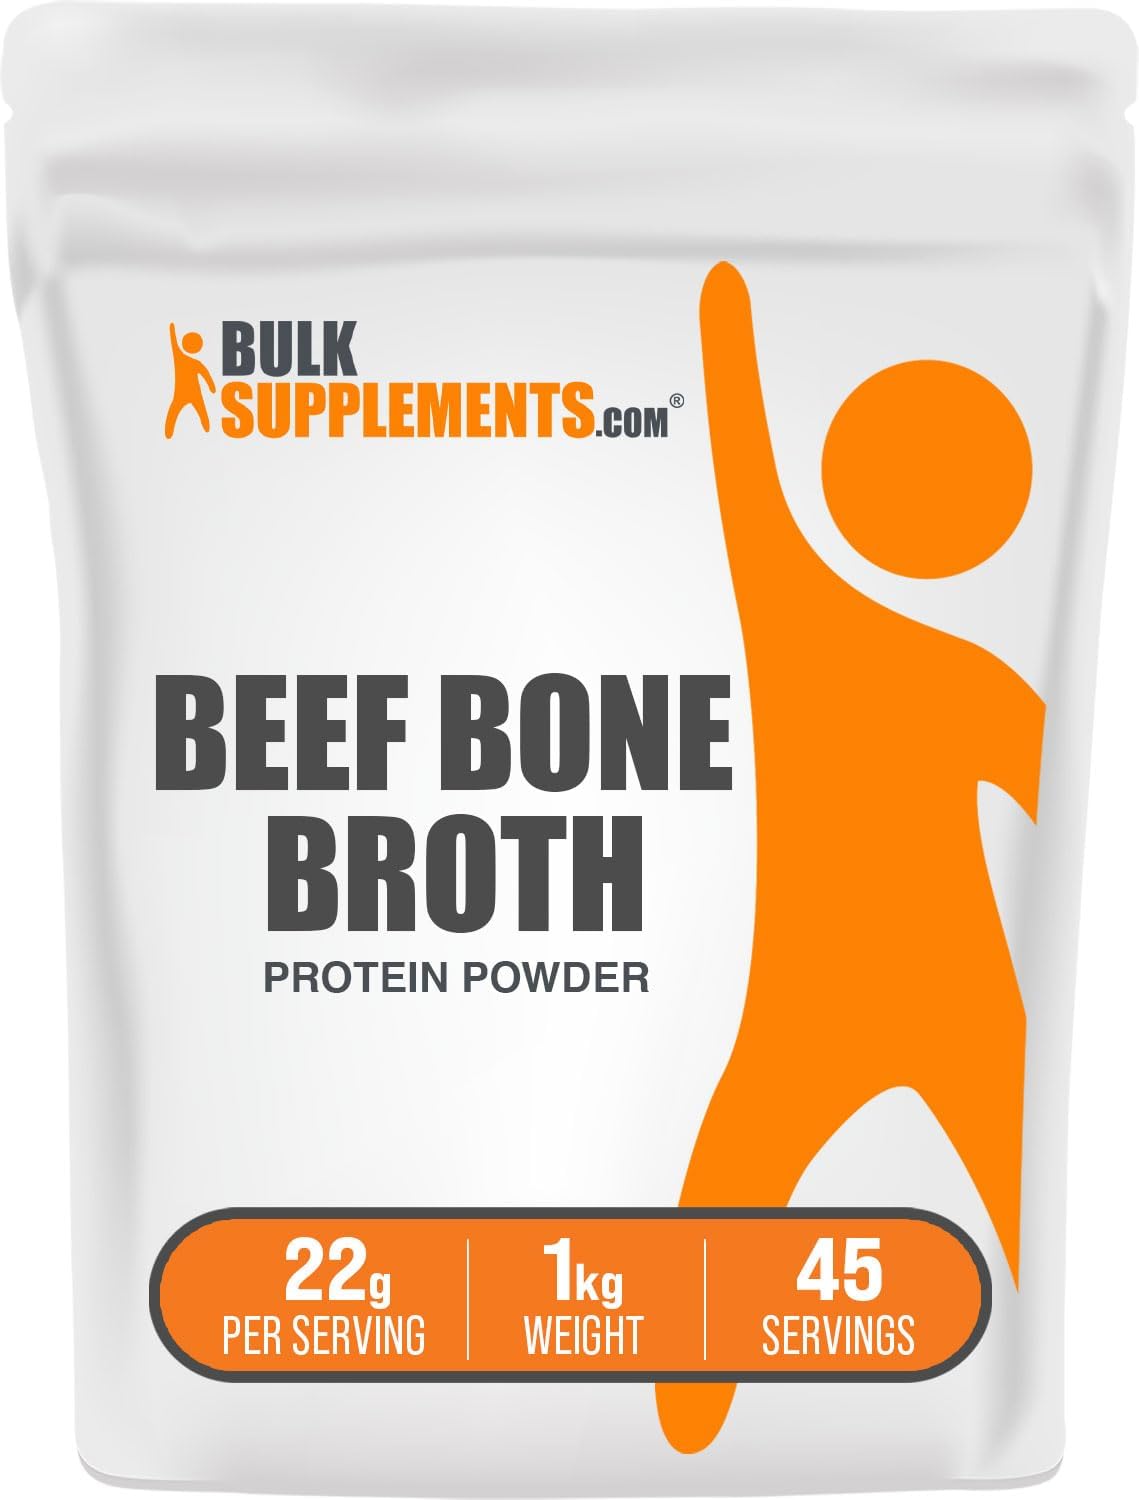 BULKSUPPLEMENTS.COM Beef Bone Broth Protein Powder - Unflavored, Glute